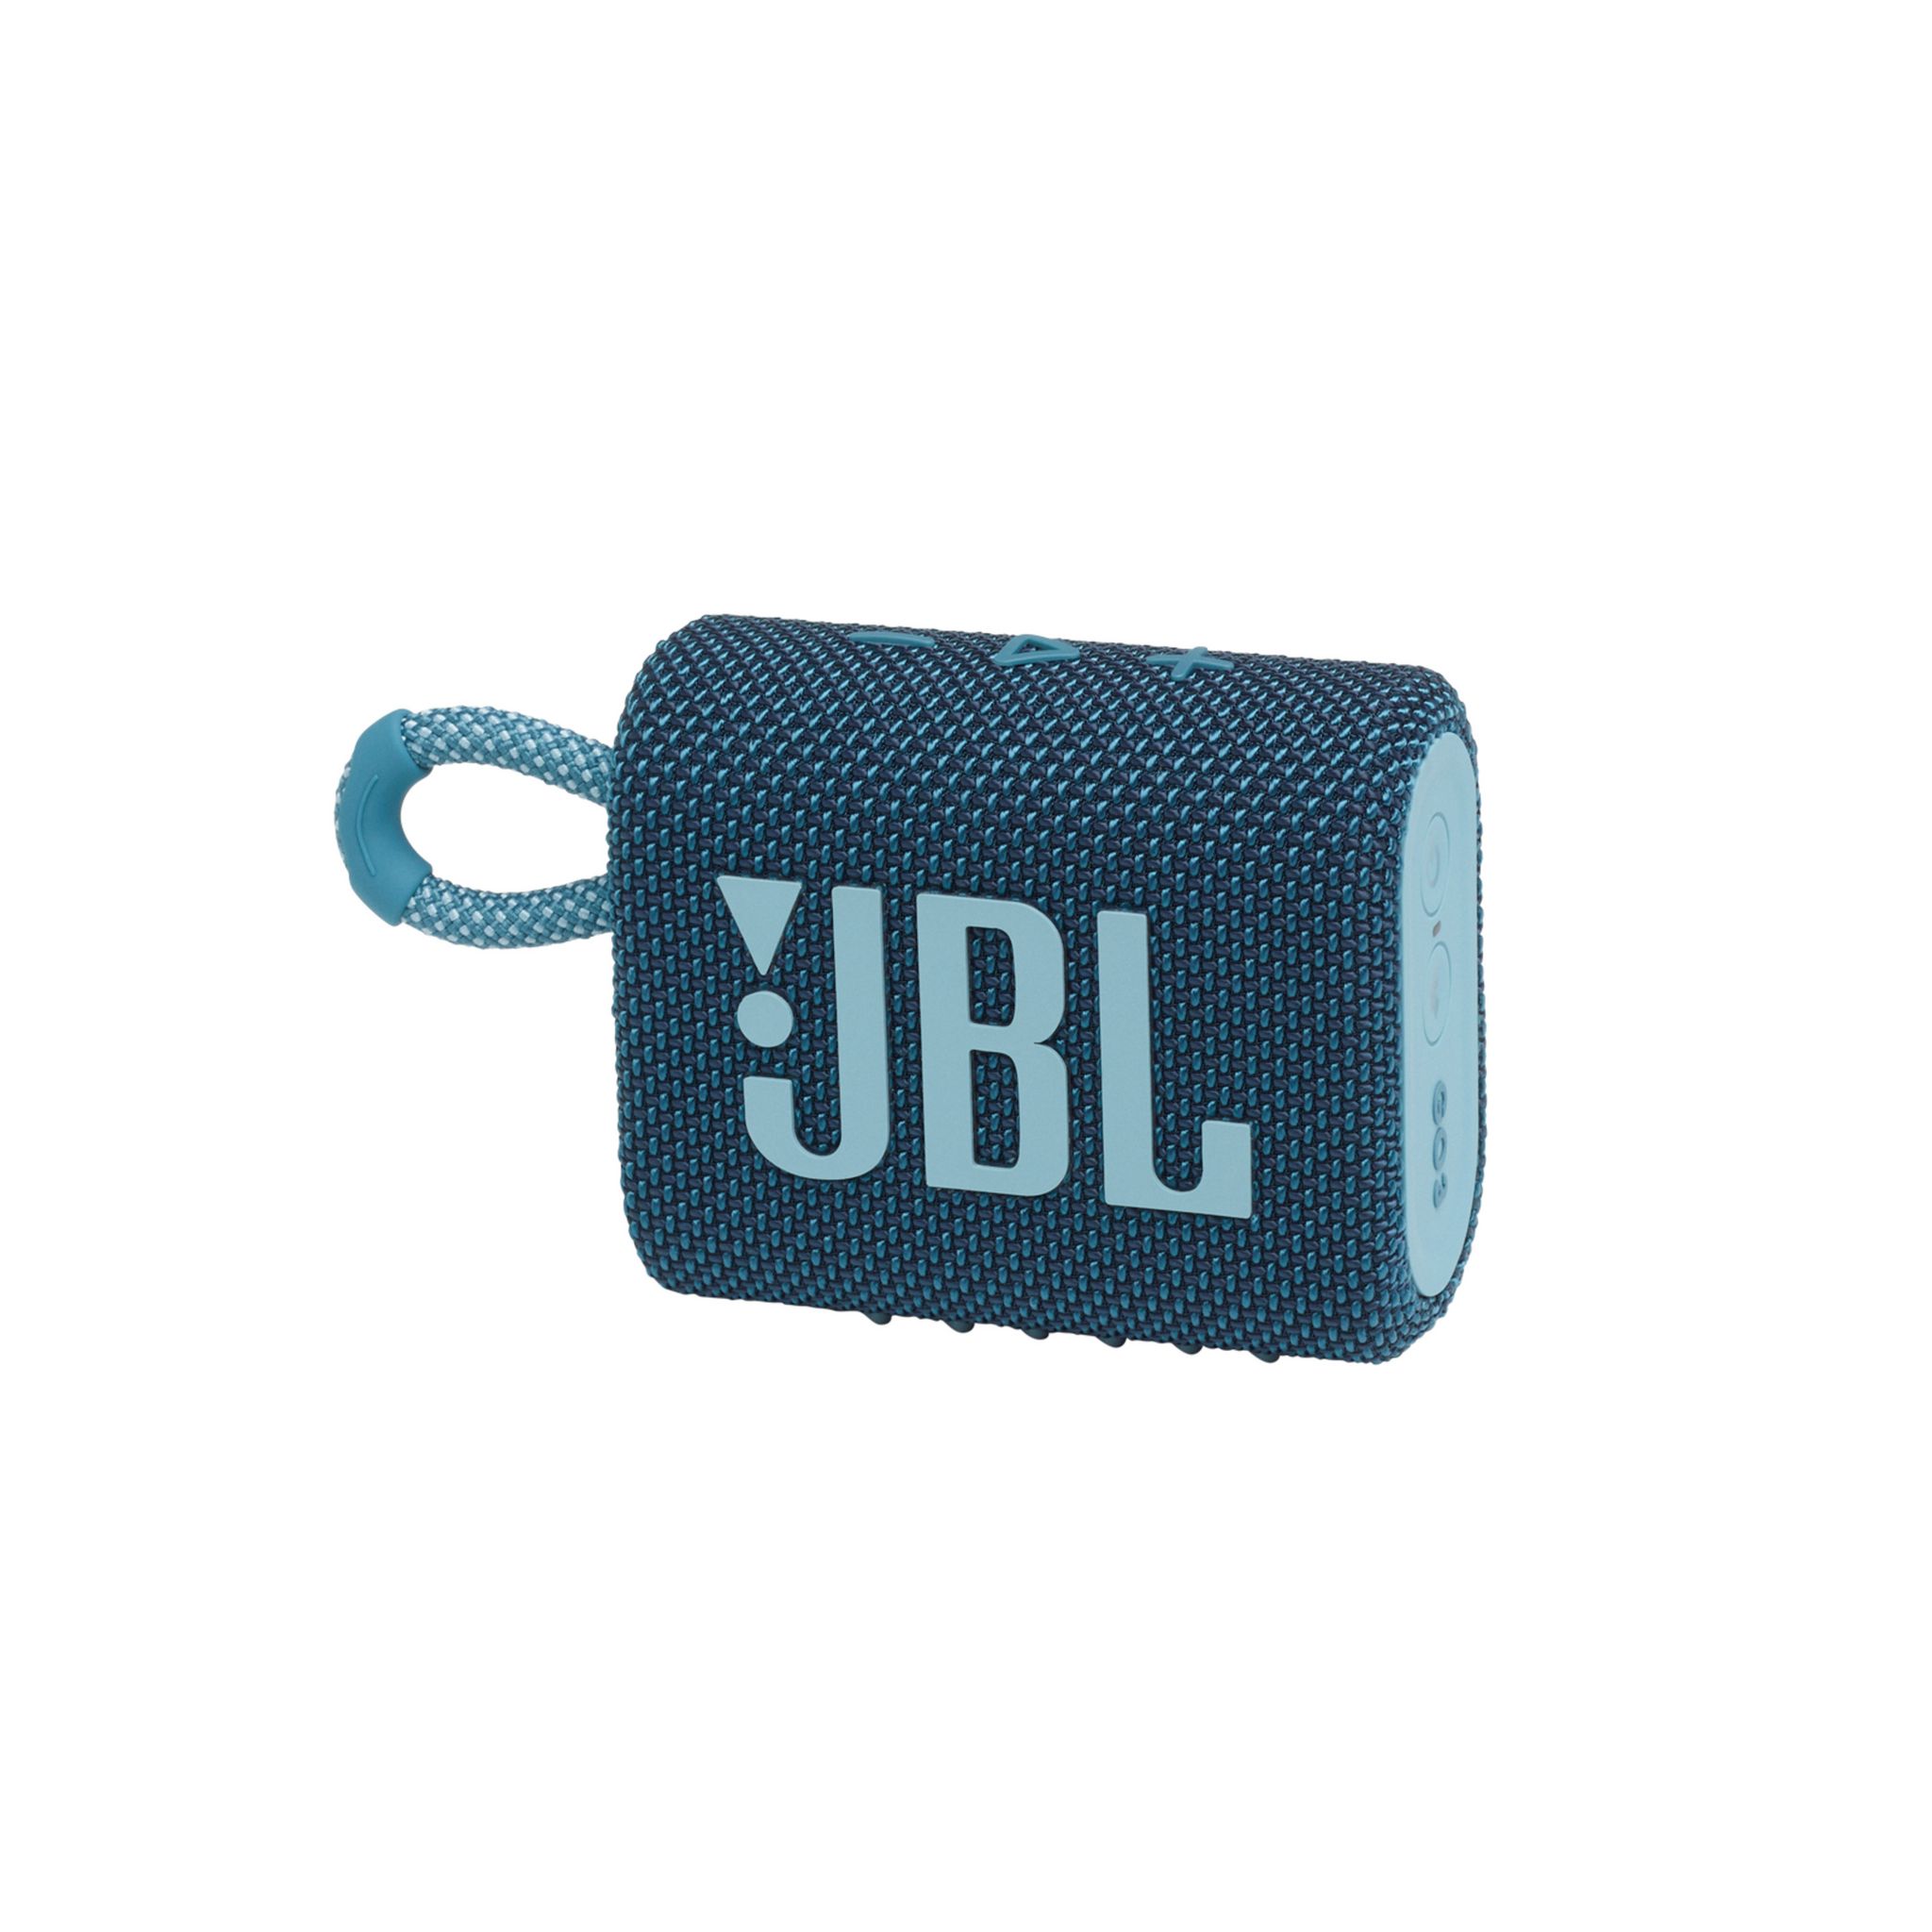 Jbl go 3 цены. JBL go 3 Black. Портативная акустическая система JBL go 3, синий (jblgo3blu). Портативная колонка JBL go 3 Red. JBL go 3 черная jblgo3blk.